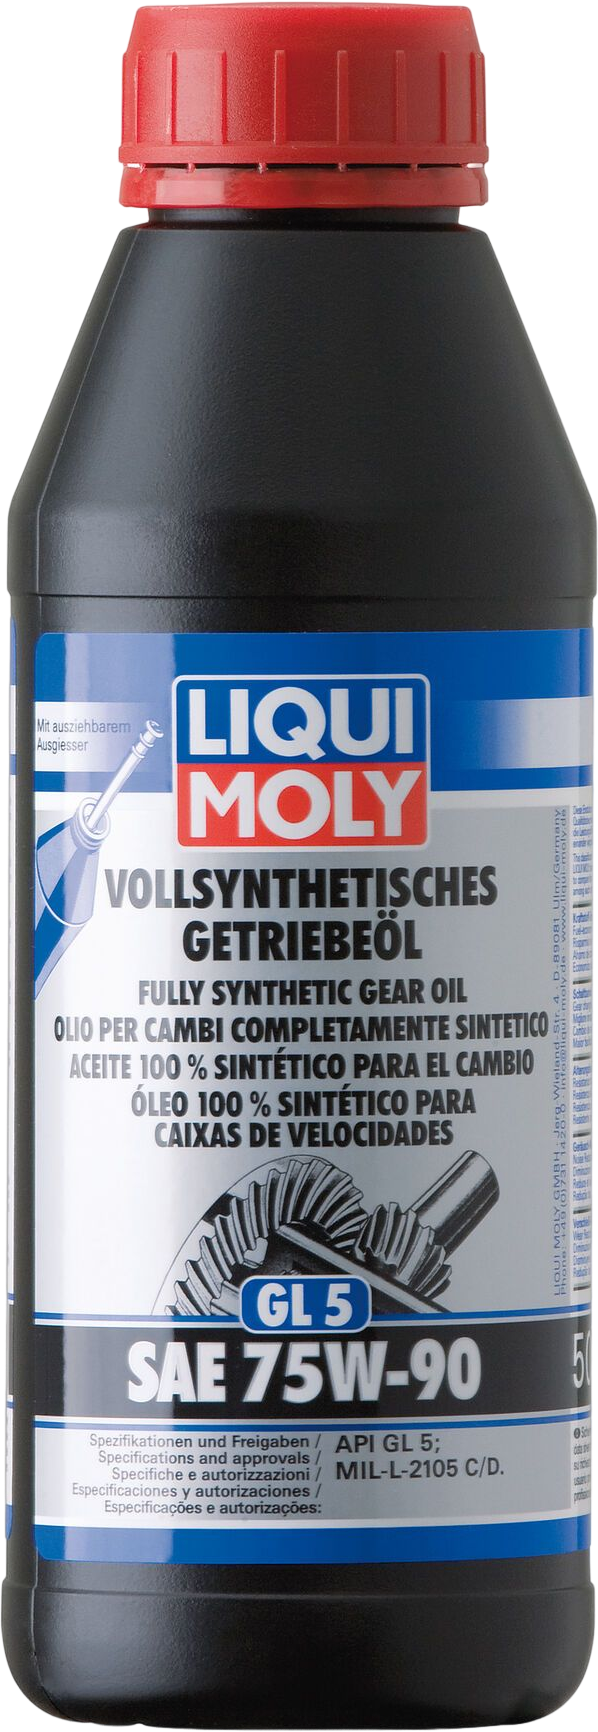 Liqui Moly Volsynthetische transmissieolie (GL5) SAE 75W-90, 6 x 500 ml detail 2